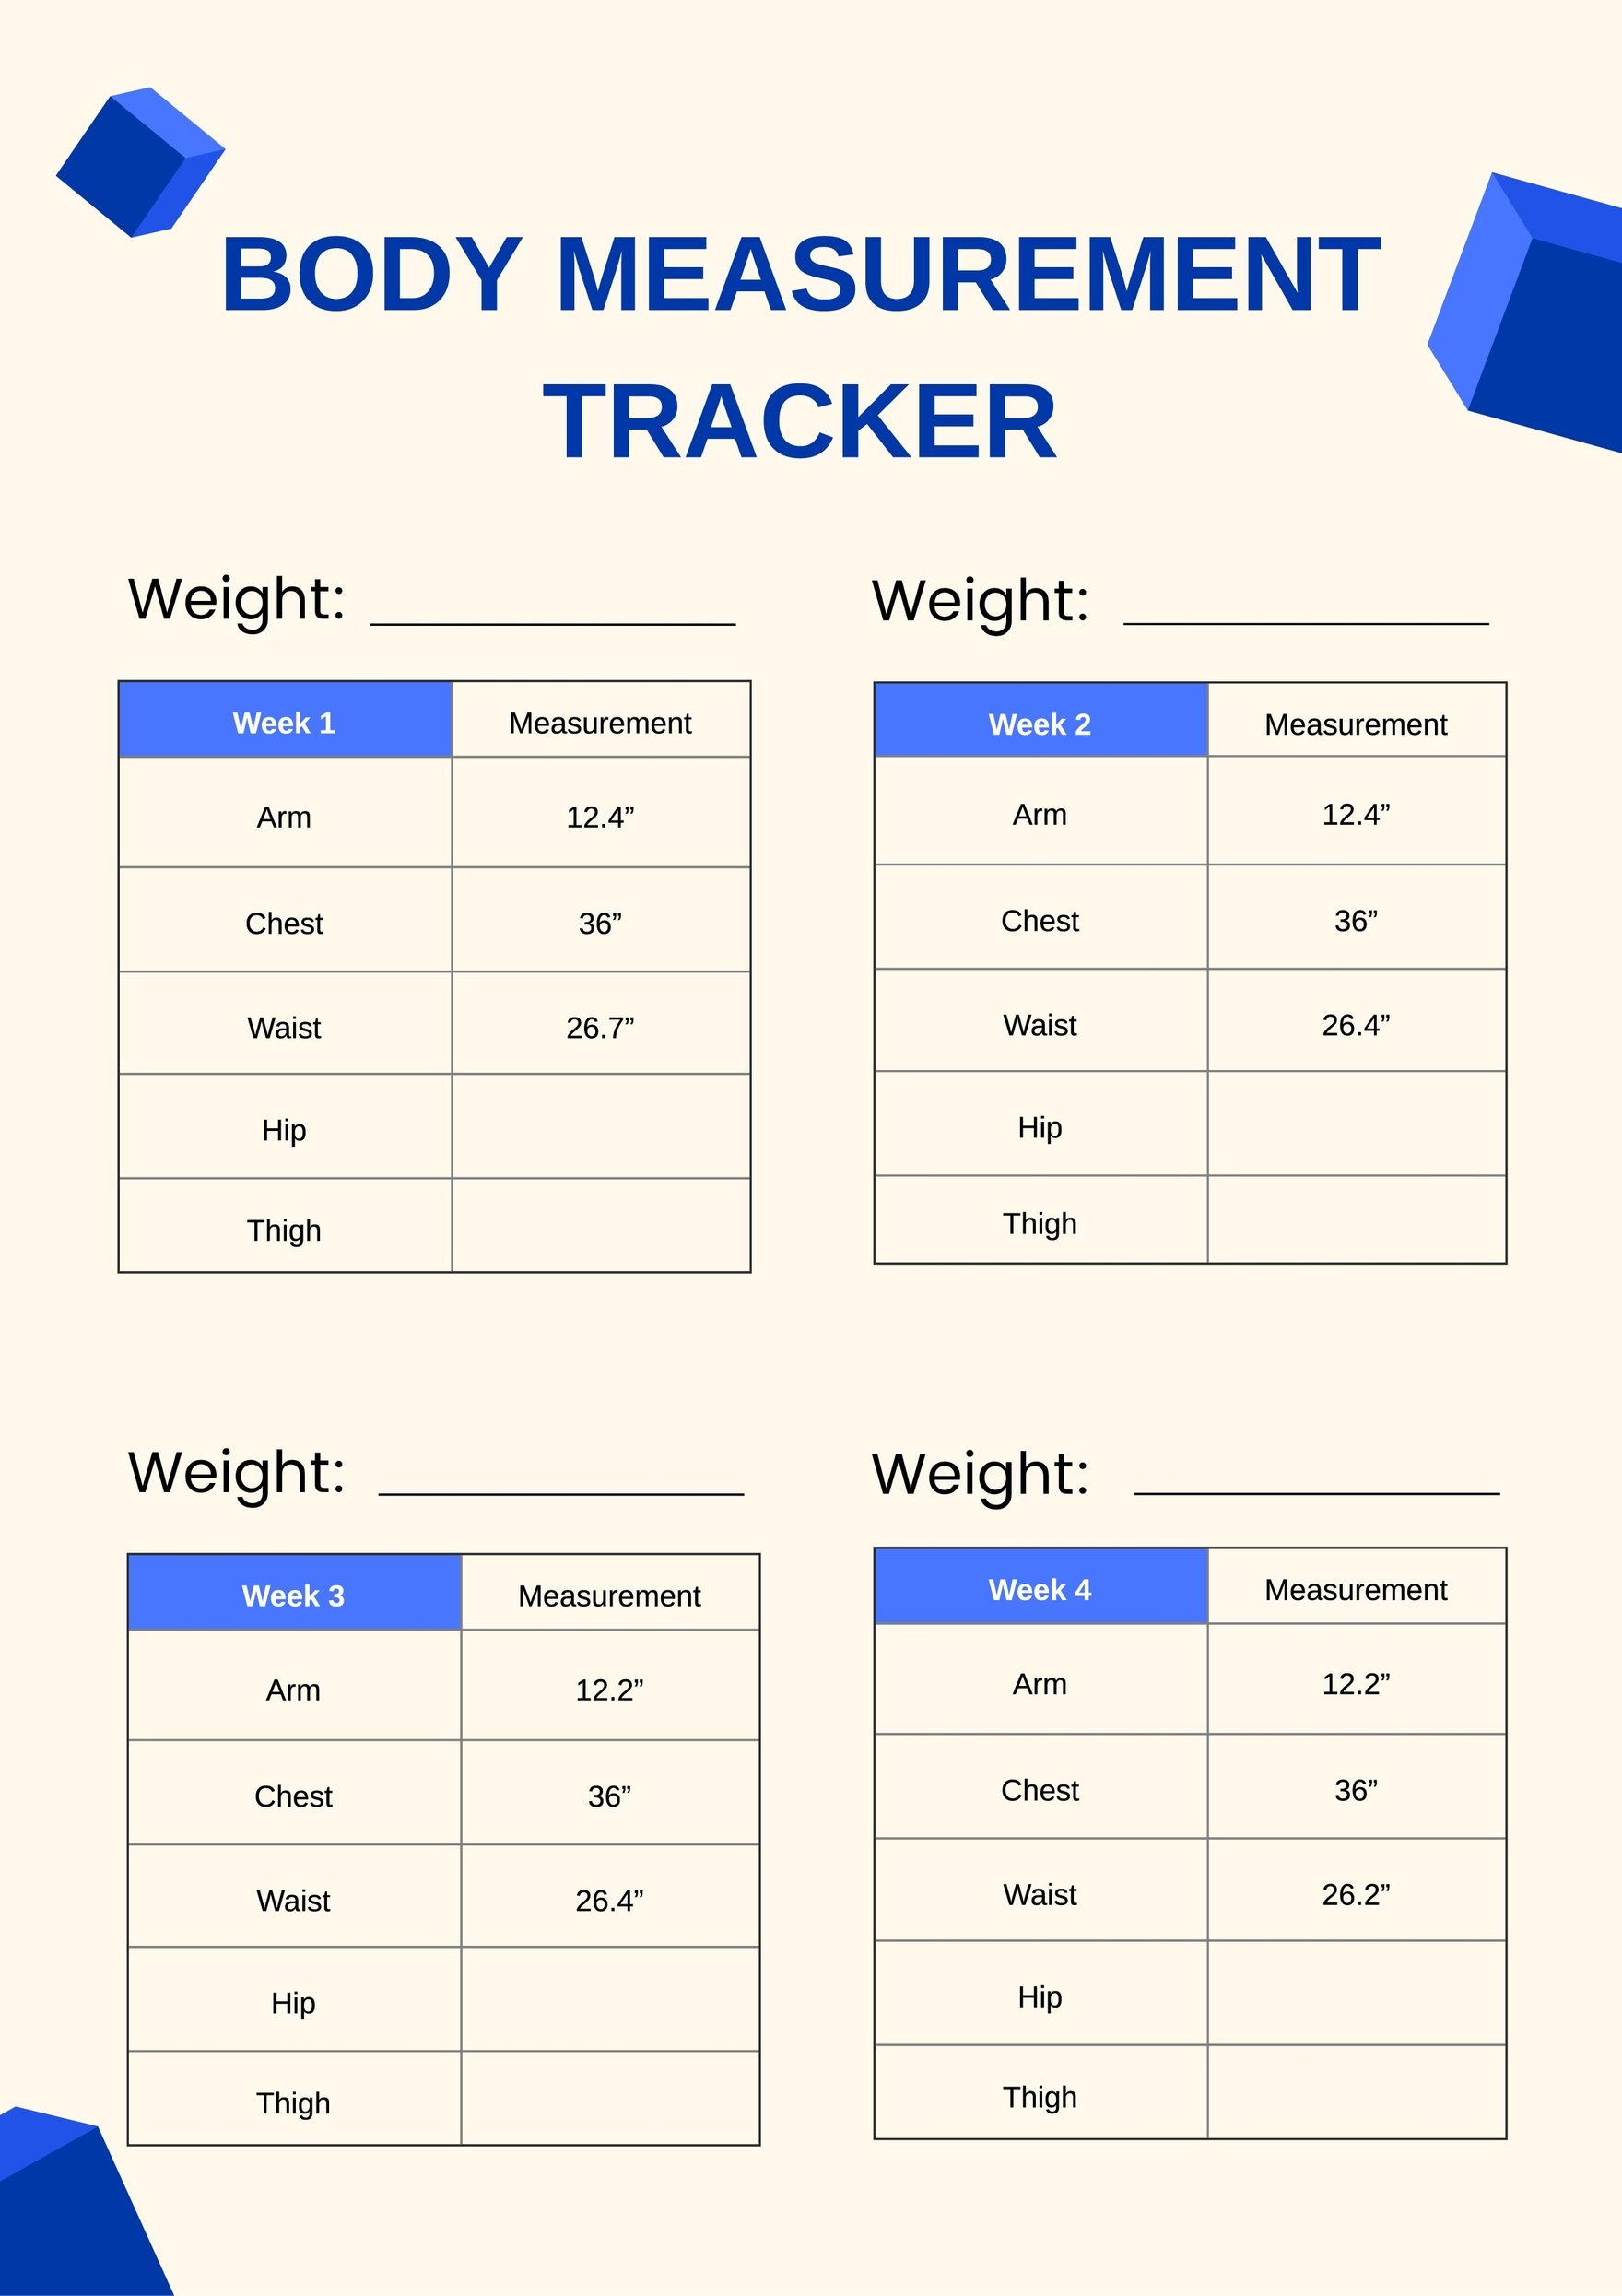 Body Measurement Tracker BMI Chart